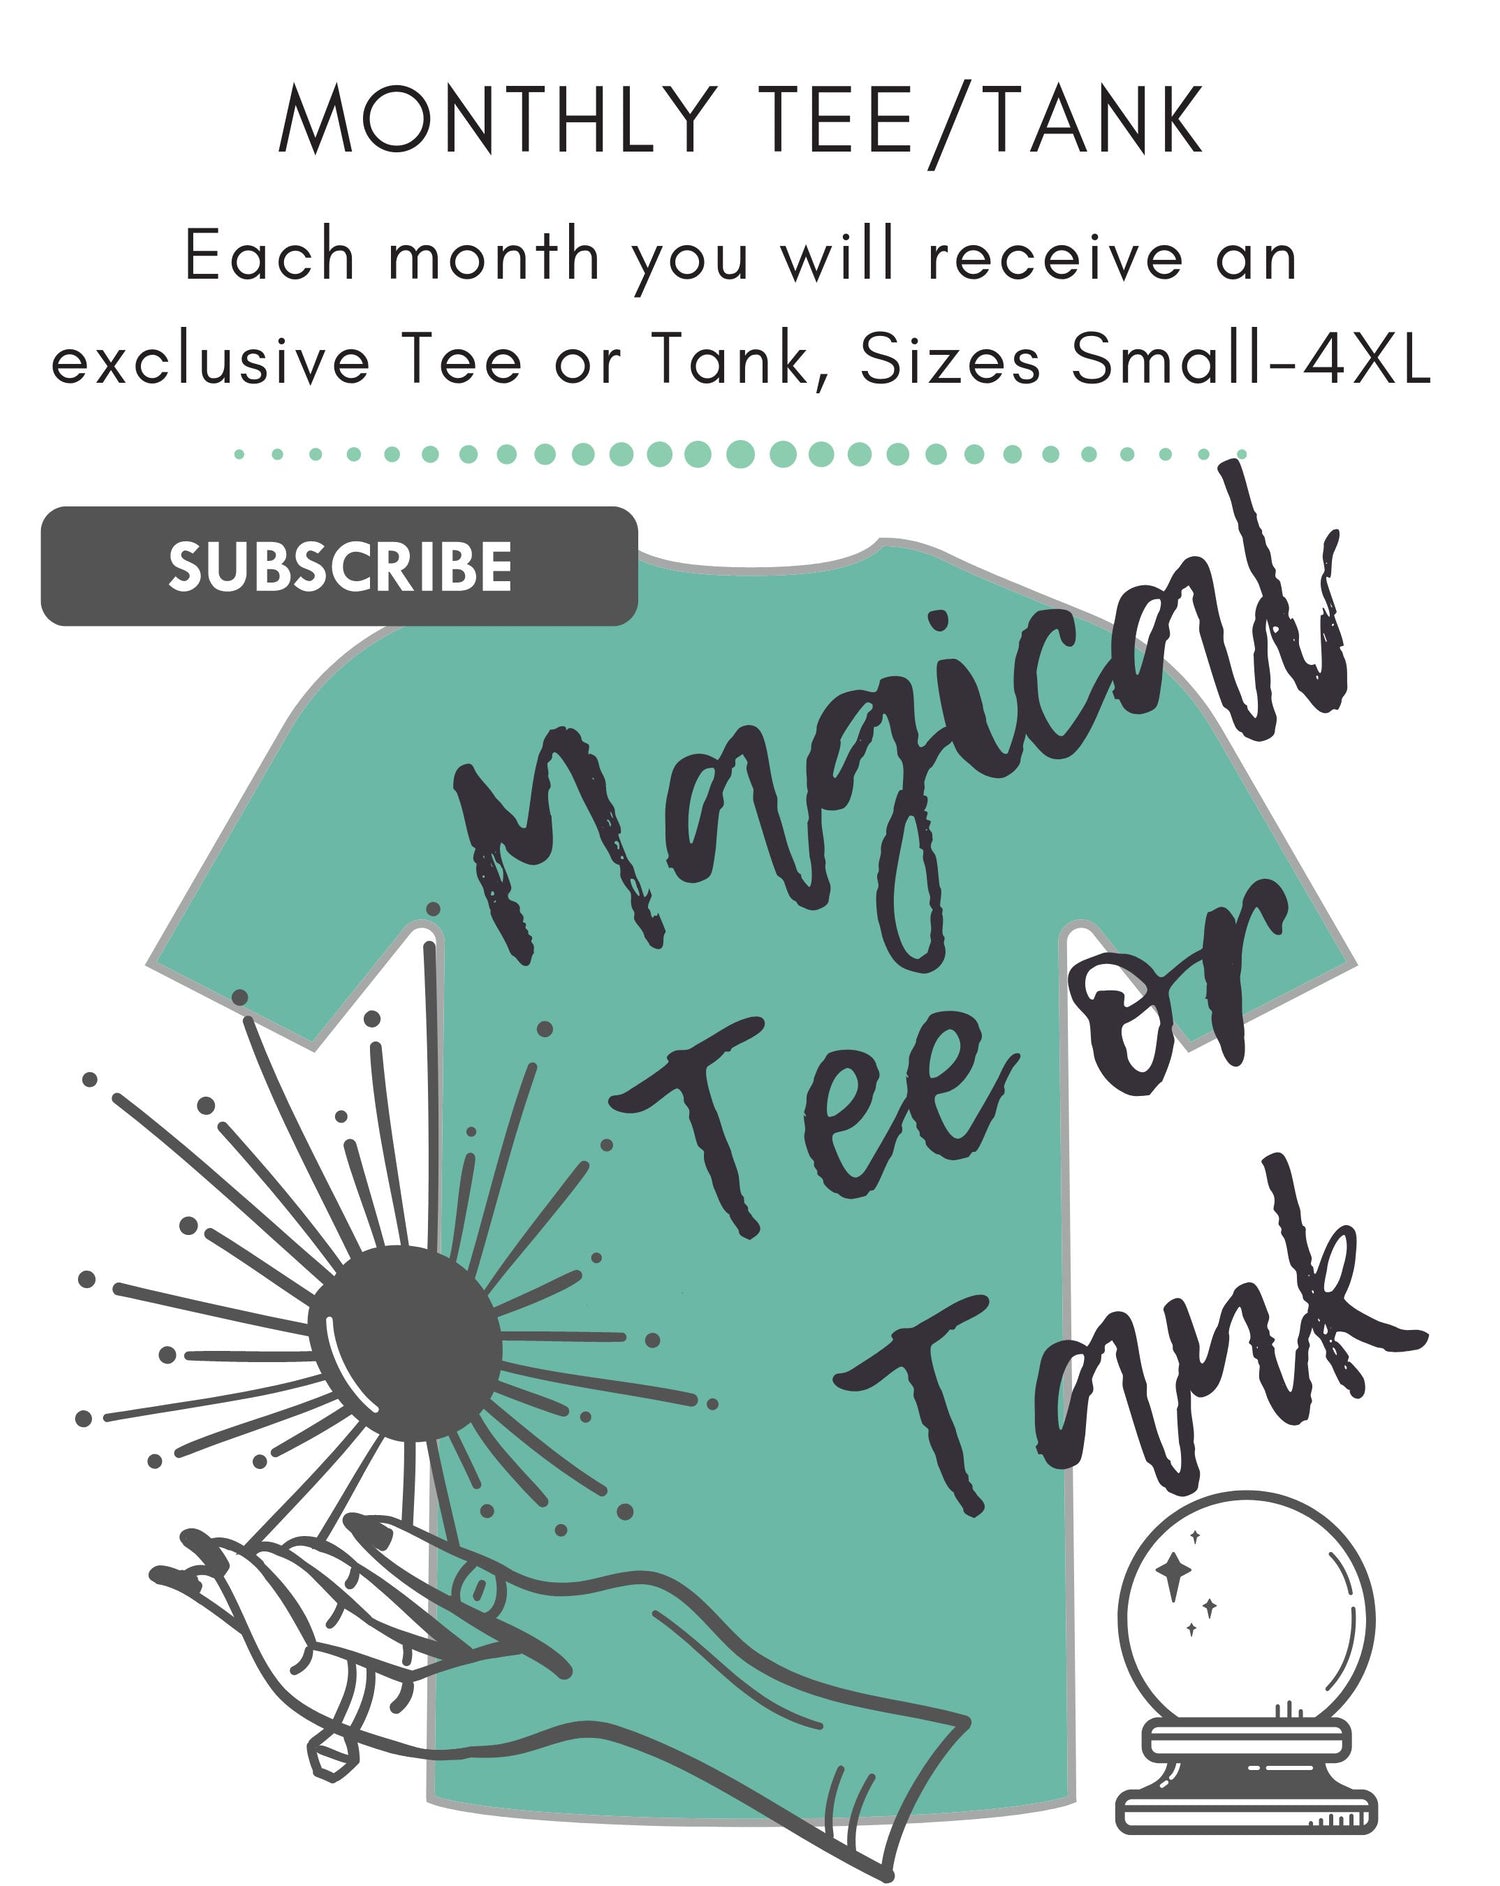 Monthly Tee/Tank!